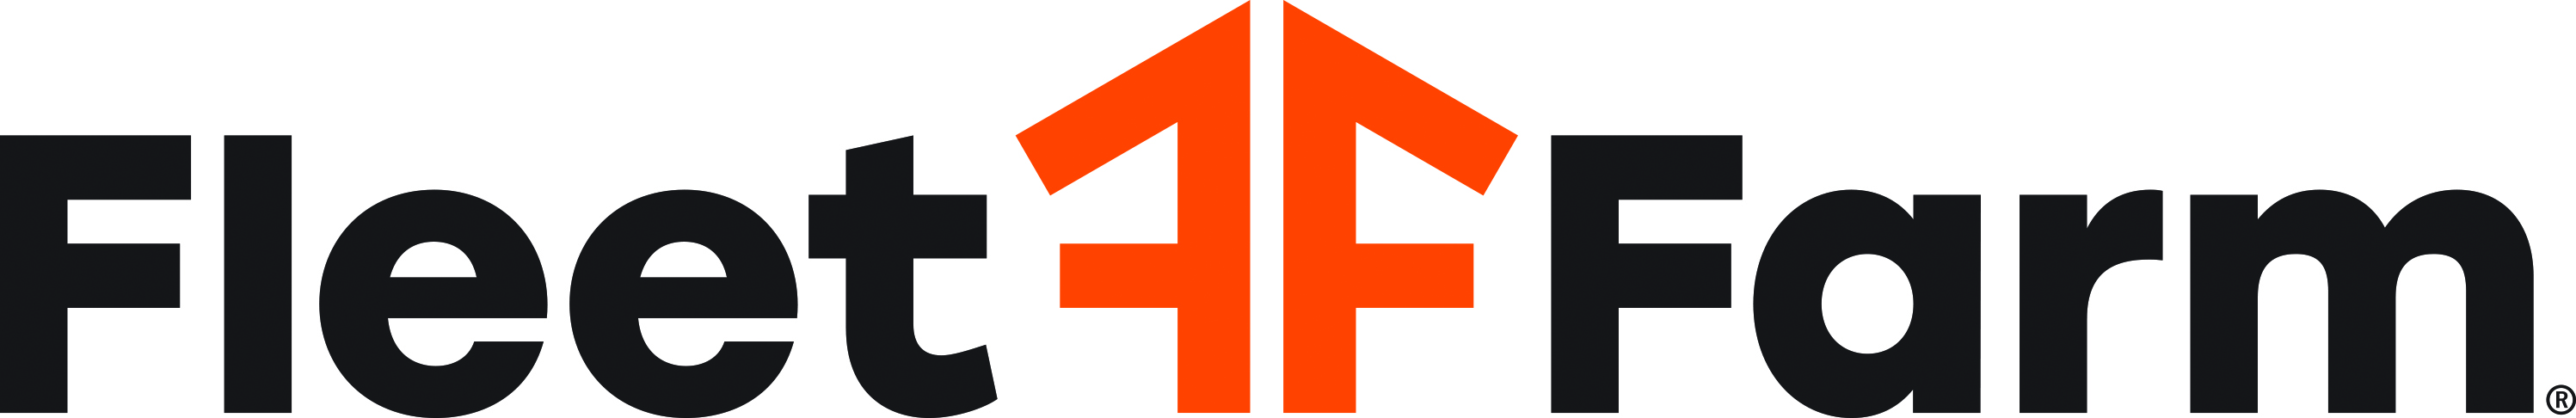 Fleet Farm Logo.jpg